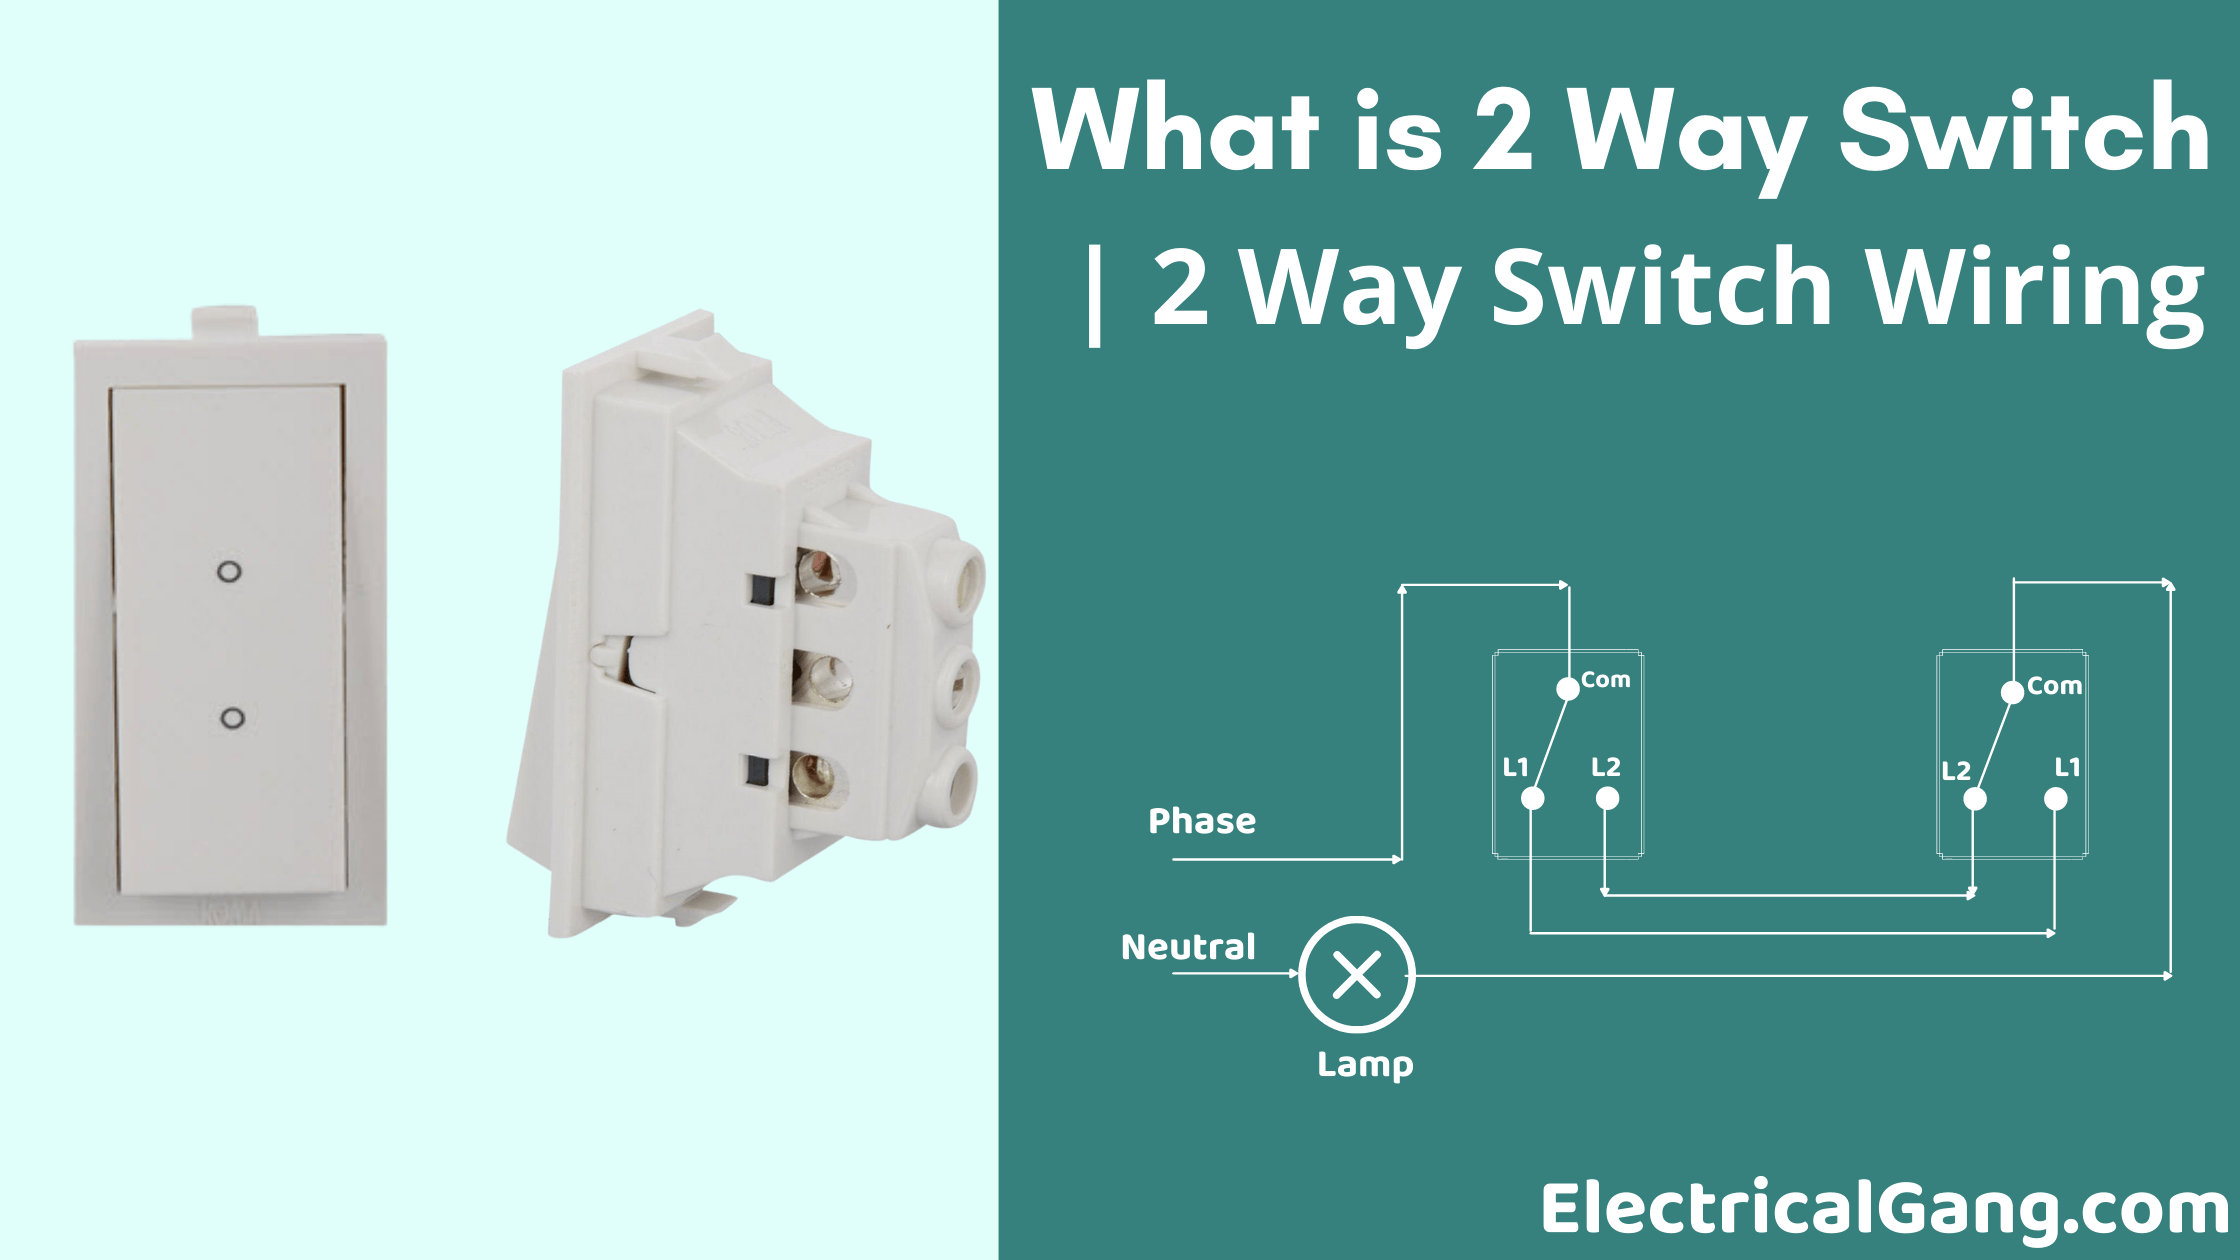 2 Way Switch Wiring